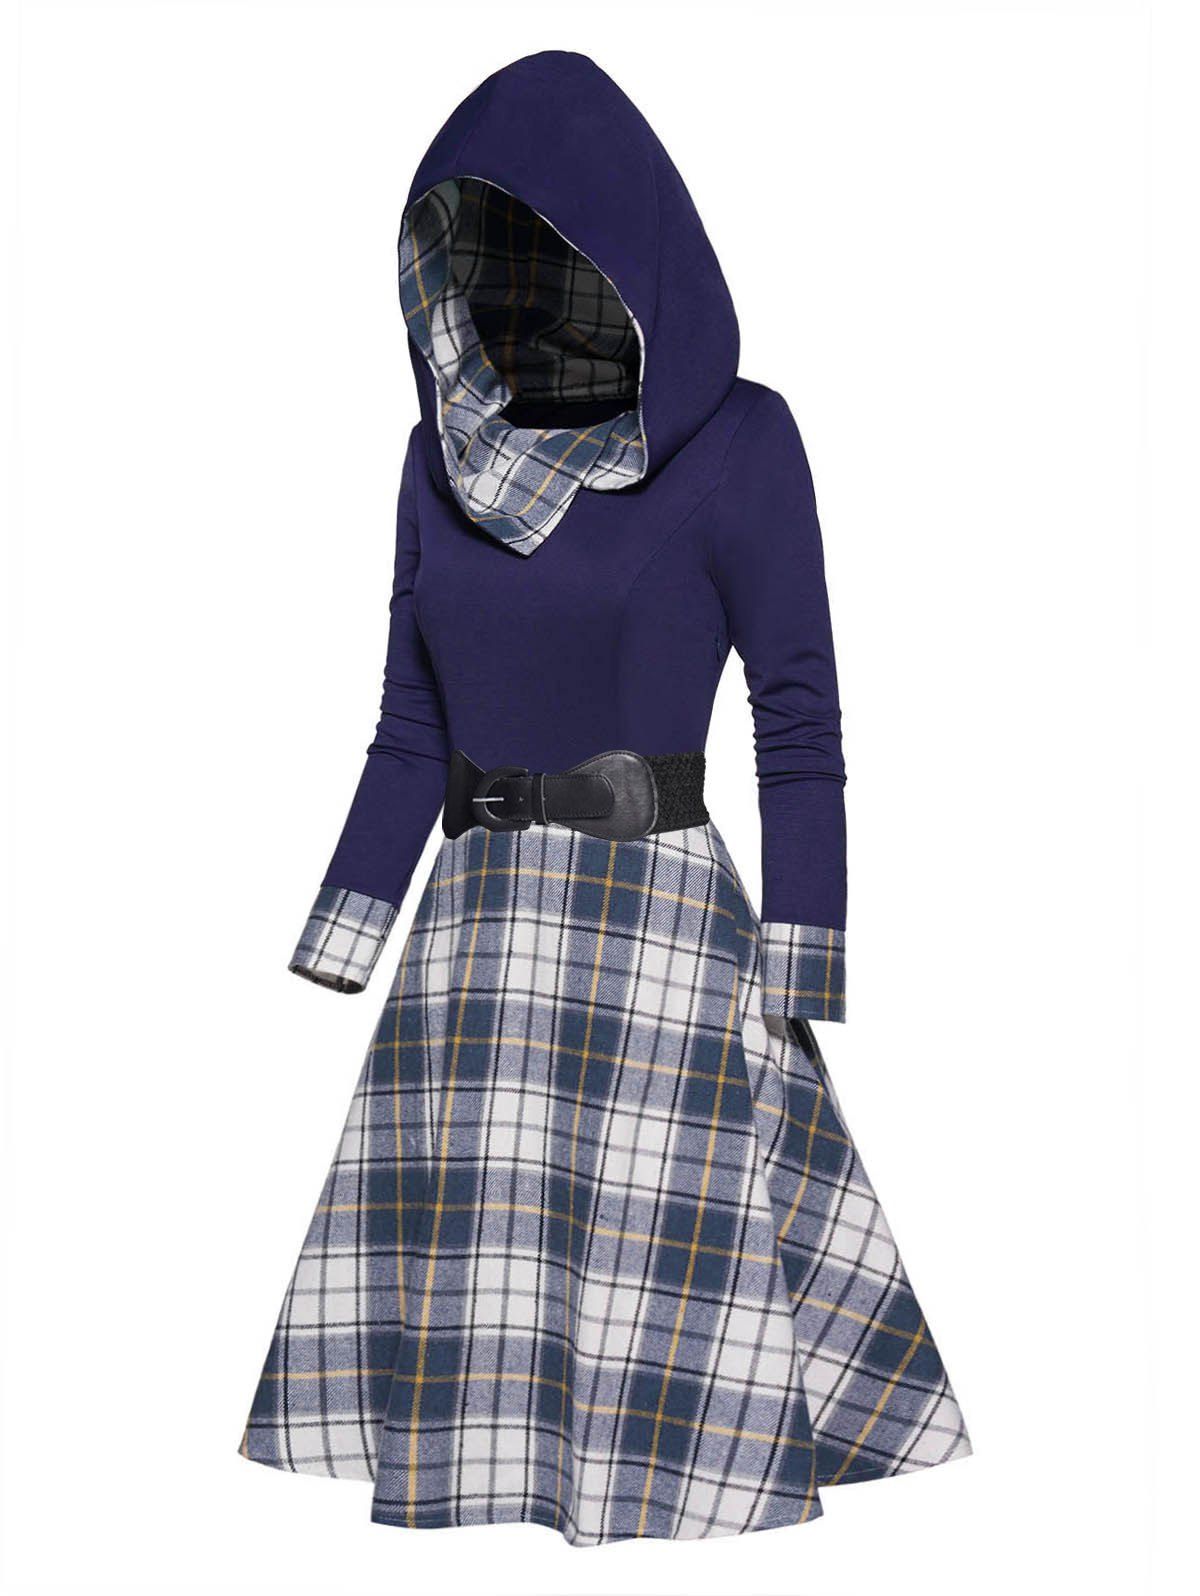 Houndstooth Plaid Print Panel Hooded Dress Belted High Waisted Long Sleeve A Line Mini Dress - DEEP BLUE L